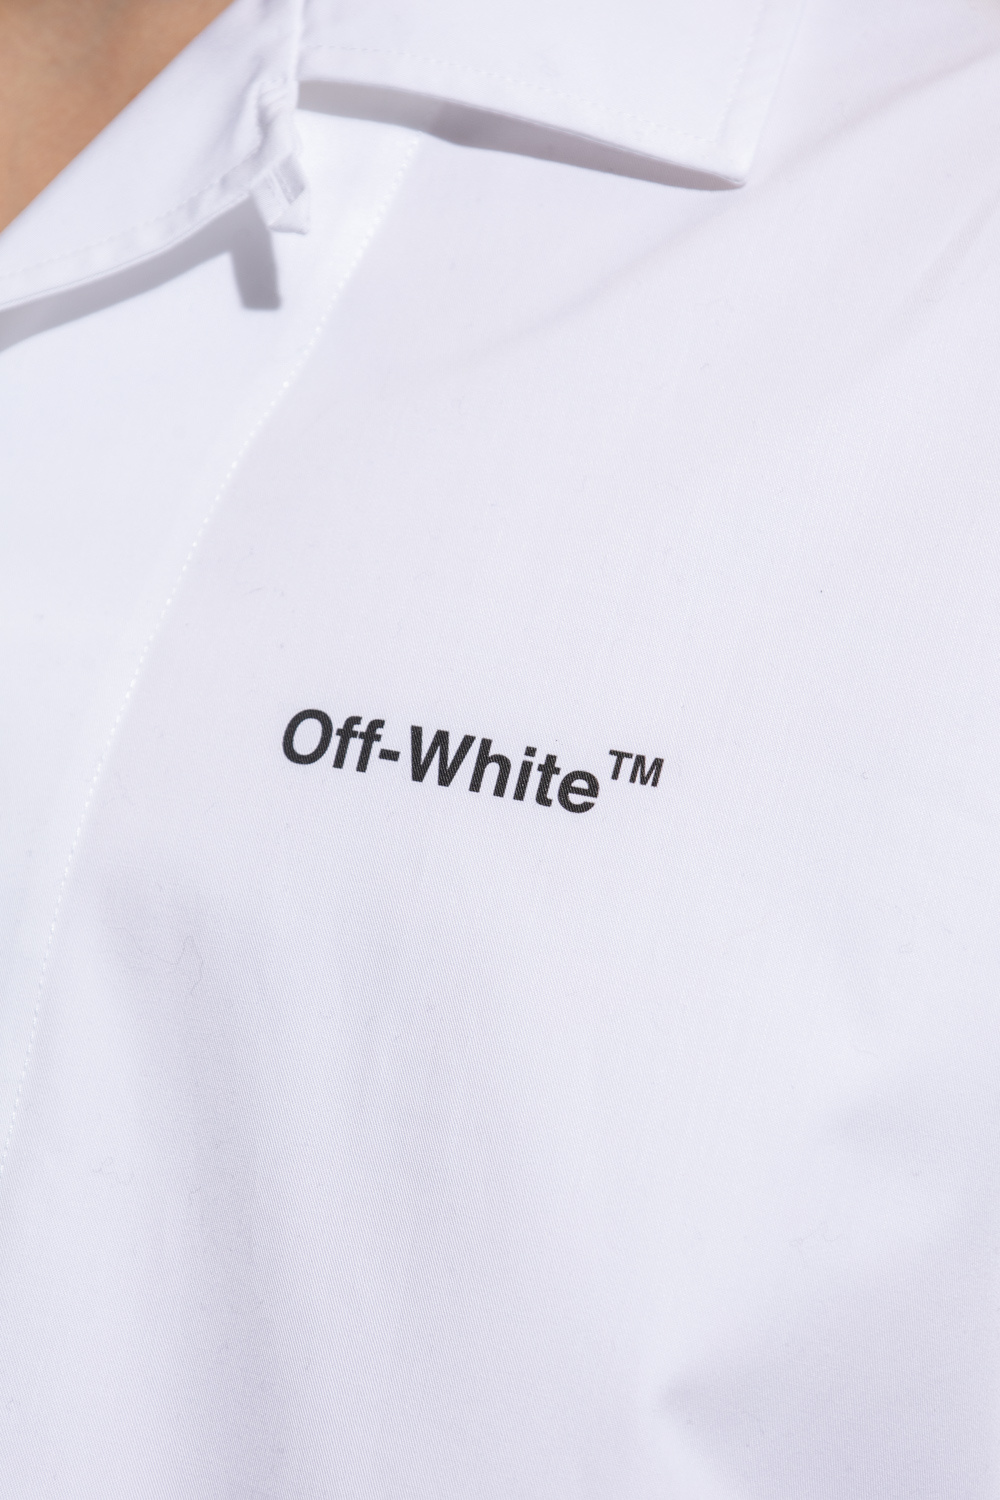 Off-White Colton Shirt Jacket